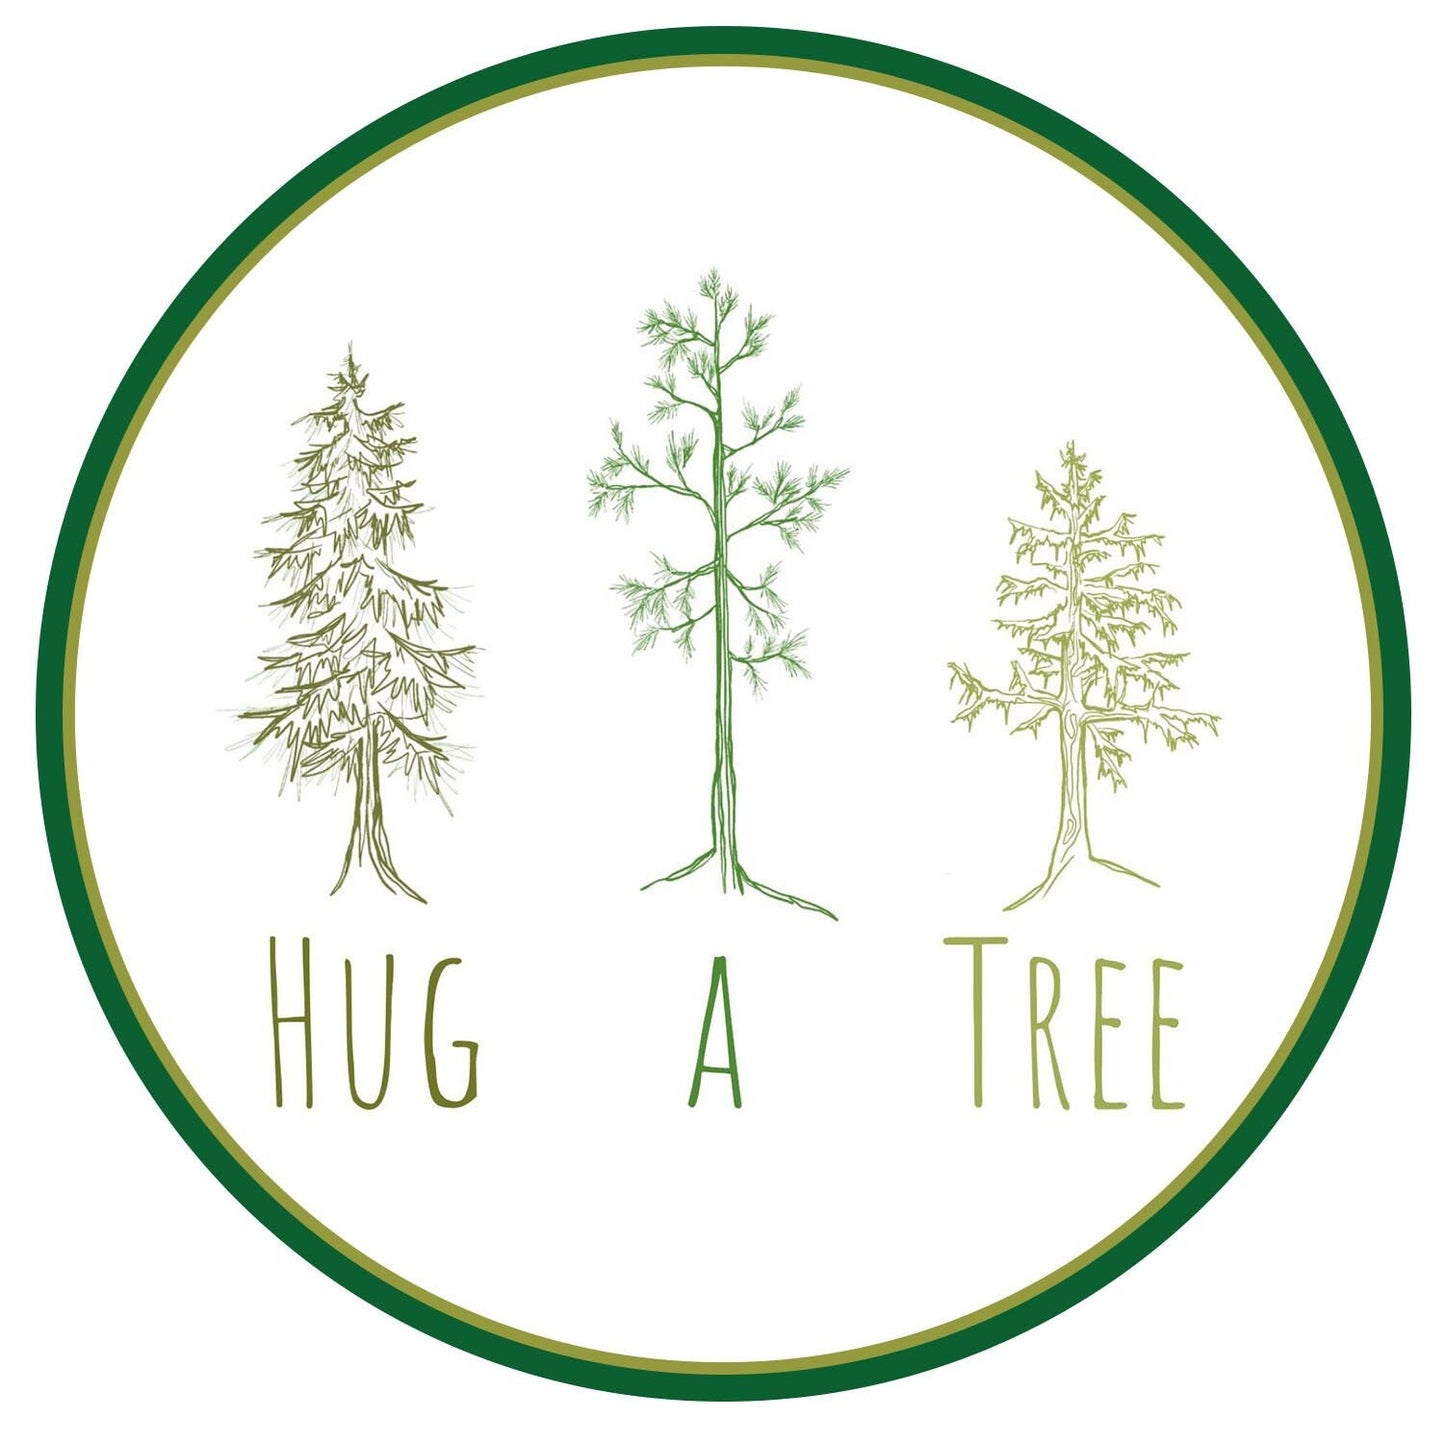 Hug a tree pine tree nature botanical waterproof sticker